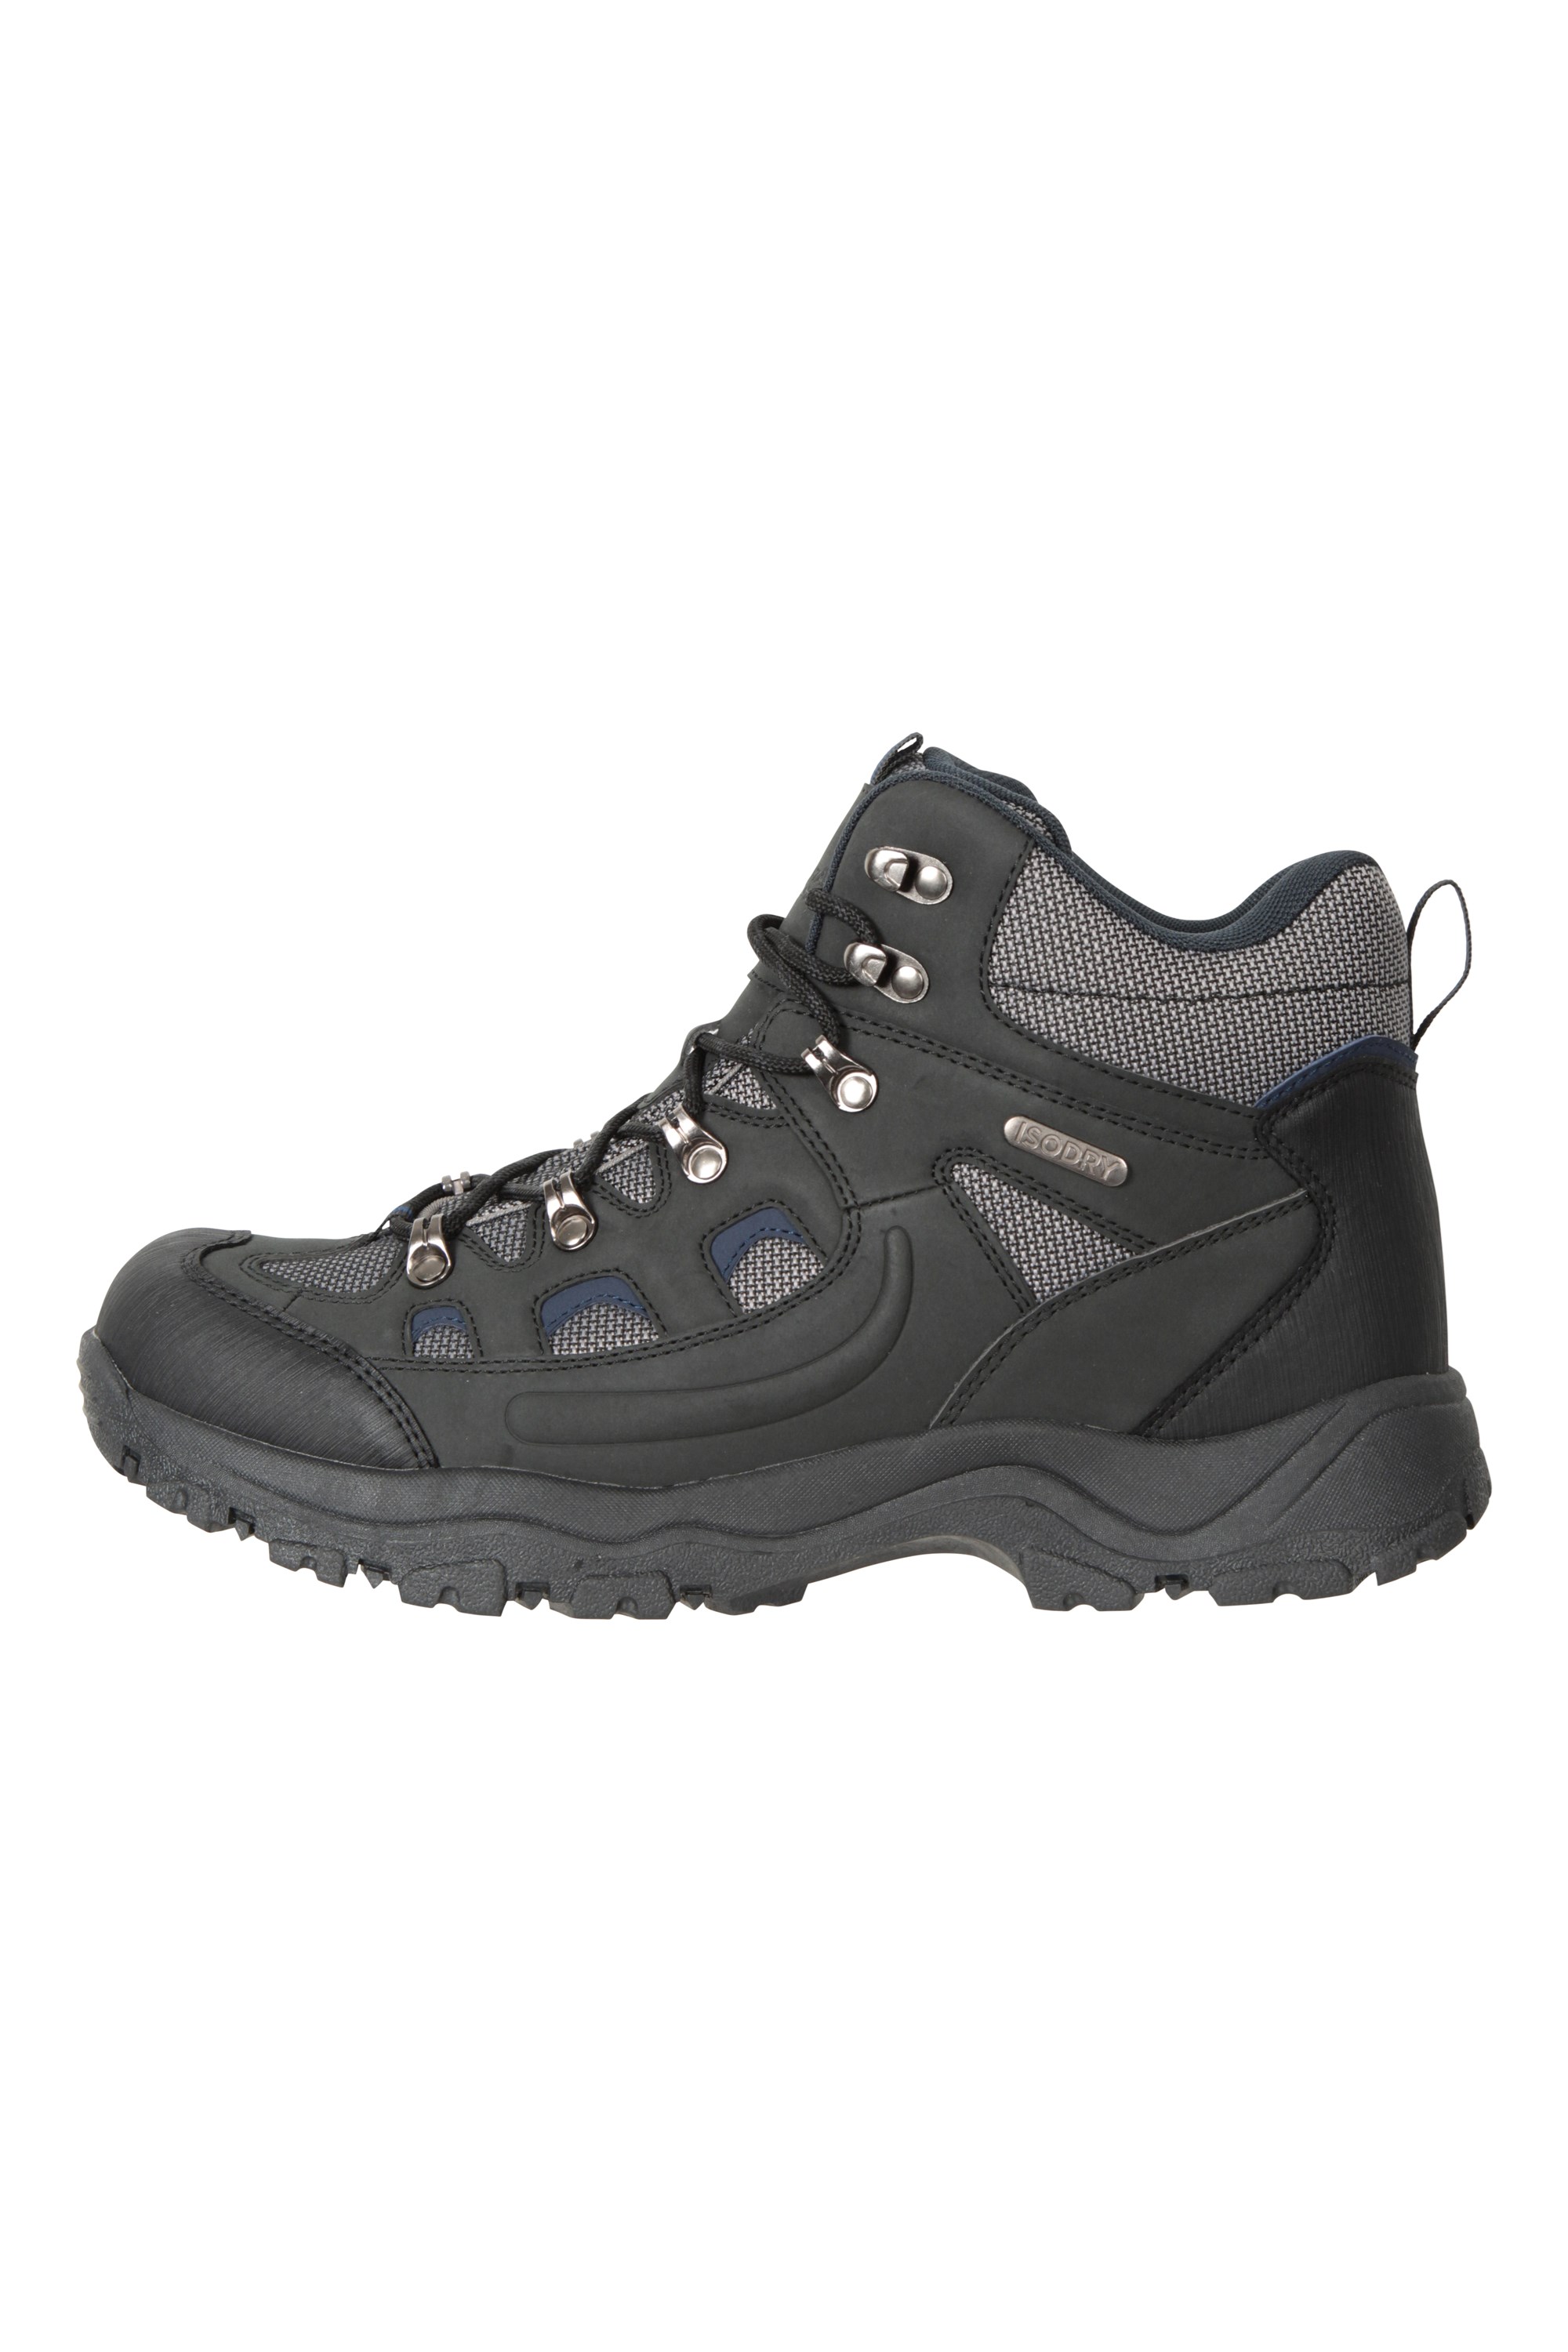 Mountain Warehouse Adventurer Mens Waterproof Hiking Boots Khaki 7 M US Men  : : Clothing, Shoes & Accessories